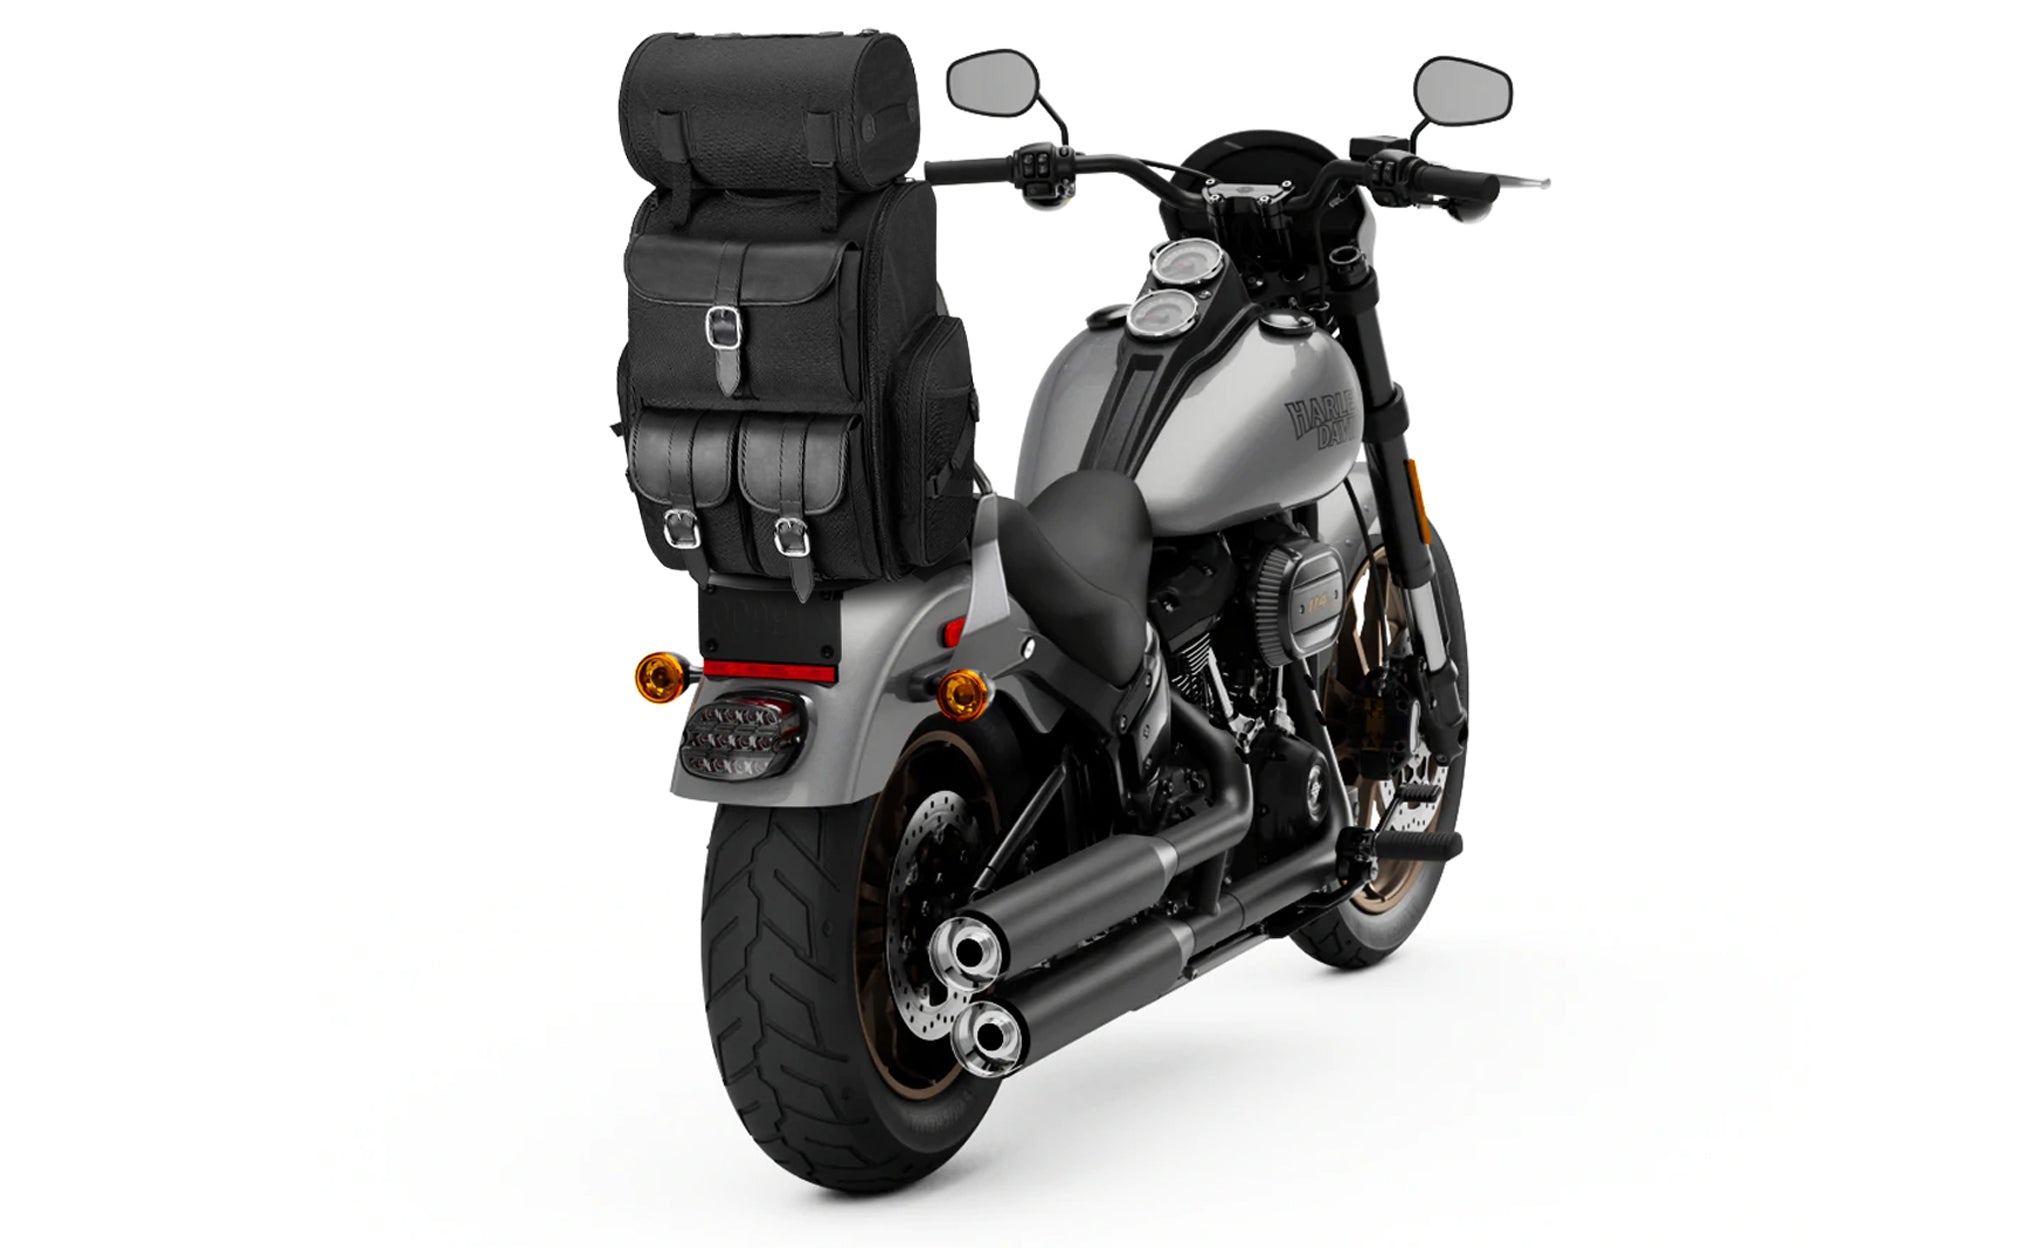 Viking Highway Extra Large Plain Yamaha Motorcycle Sissy Bar Bag Bag on Bike View @expand